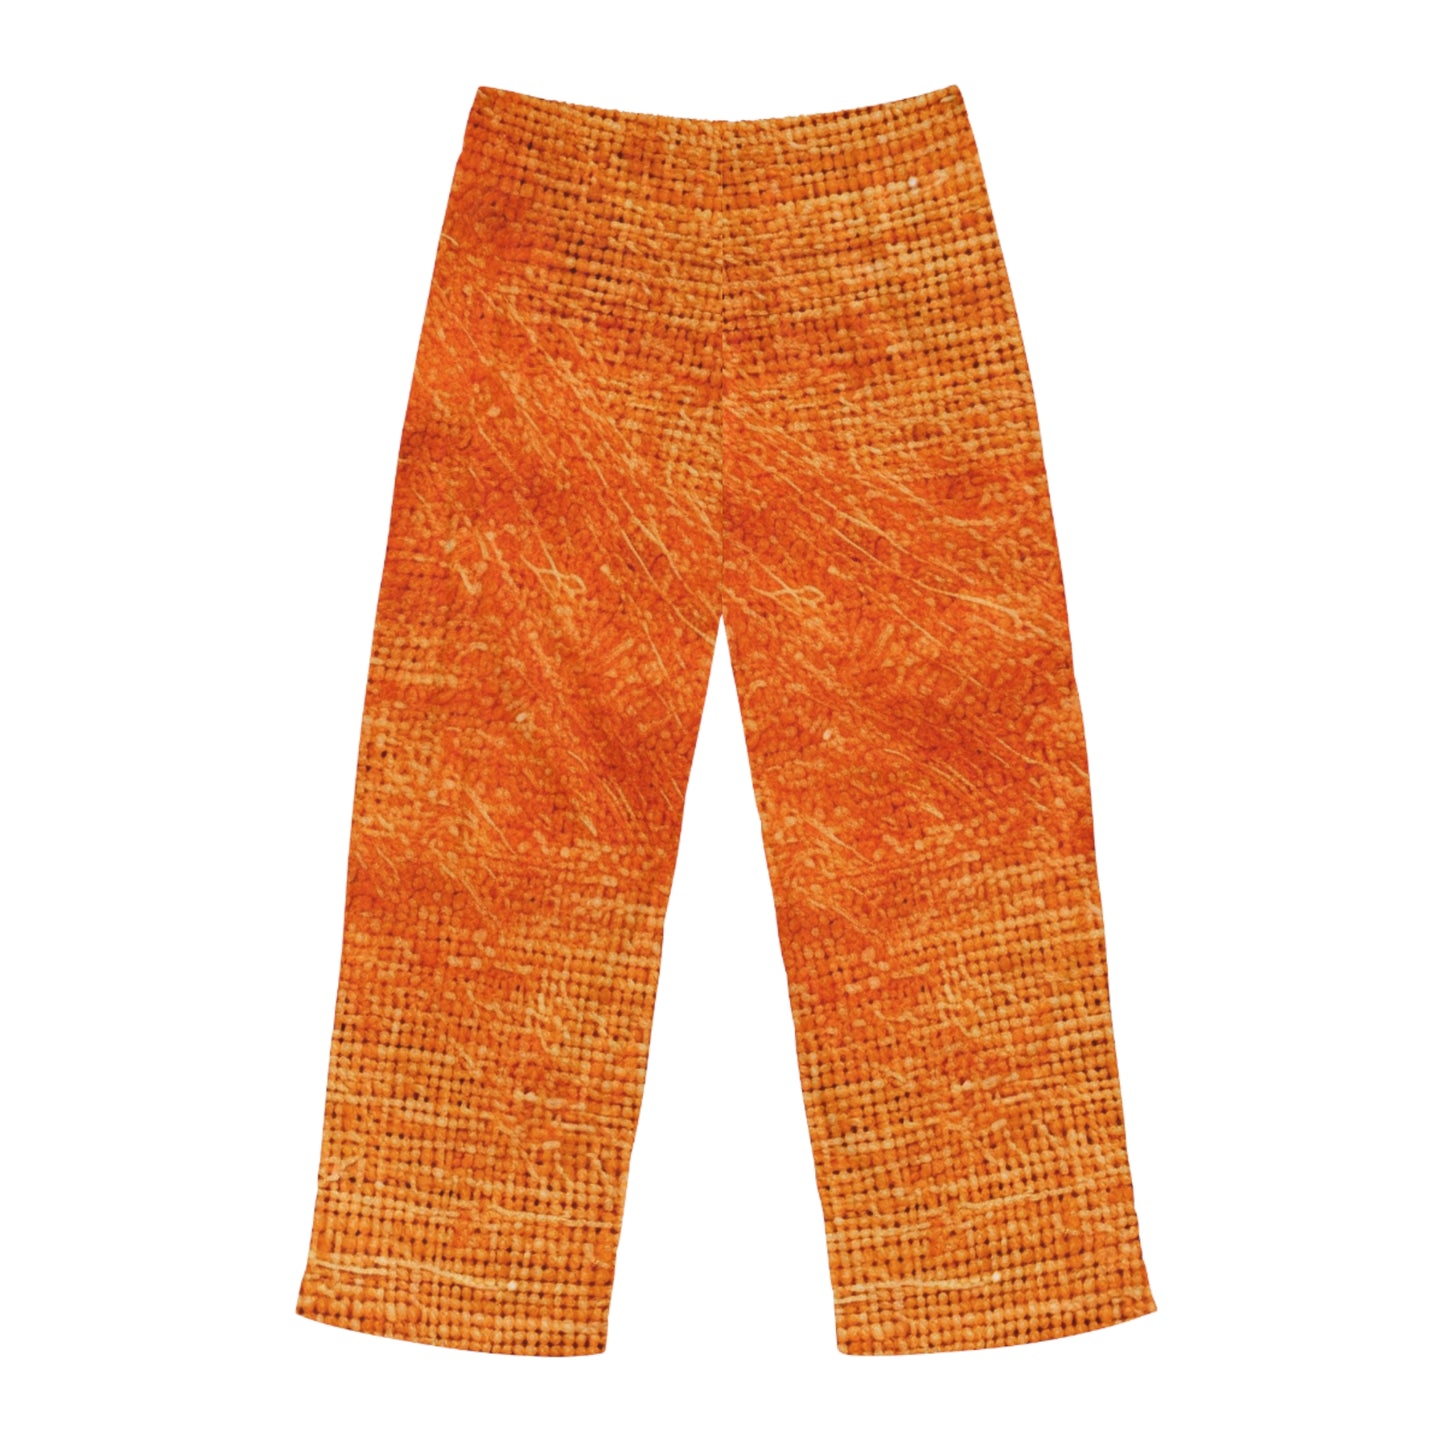 Burnt Orange/Rust: Denim-Inspired Autumn Fall Color Fabric - Men's Pajama Pants (AOP)